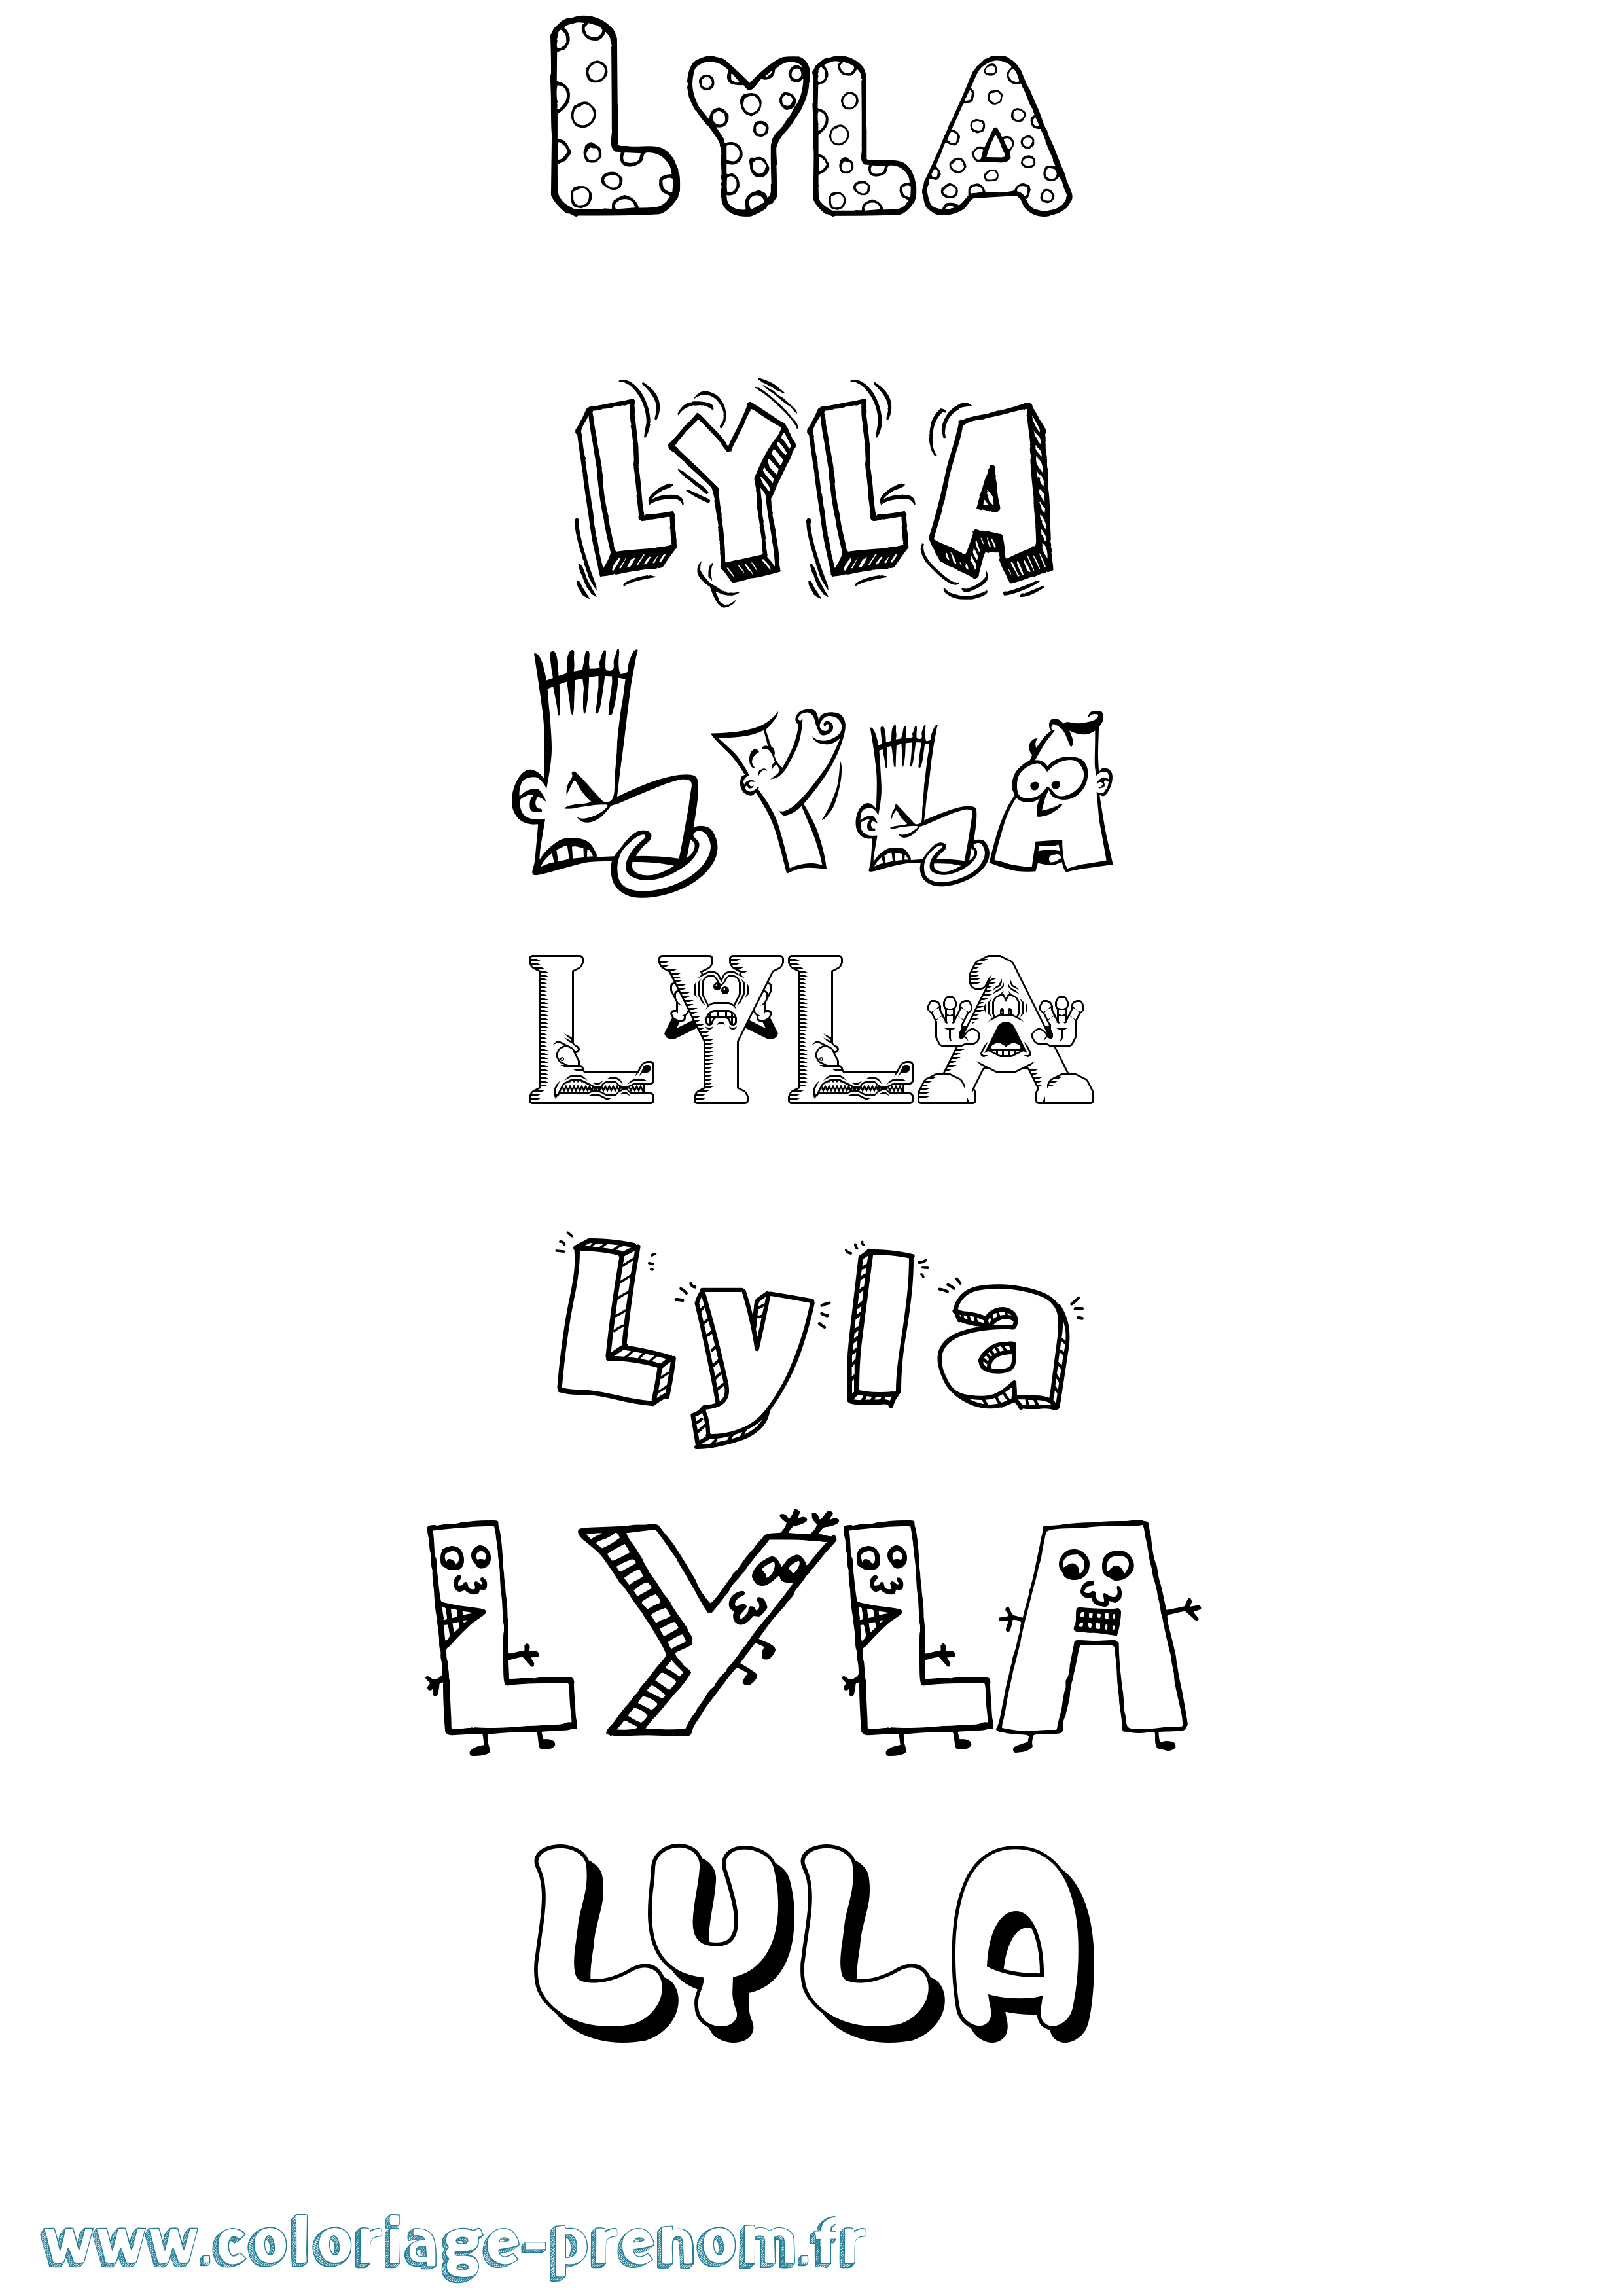 Coloriage prénom Lyla